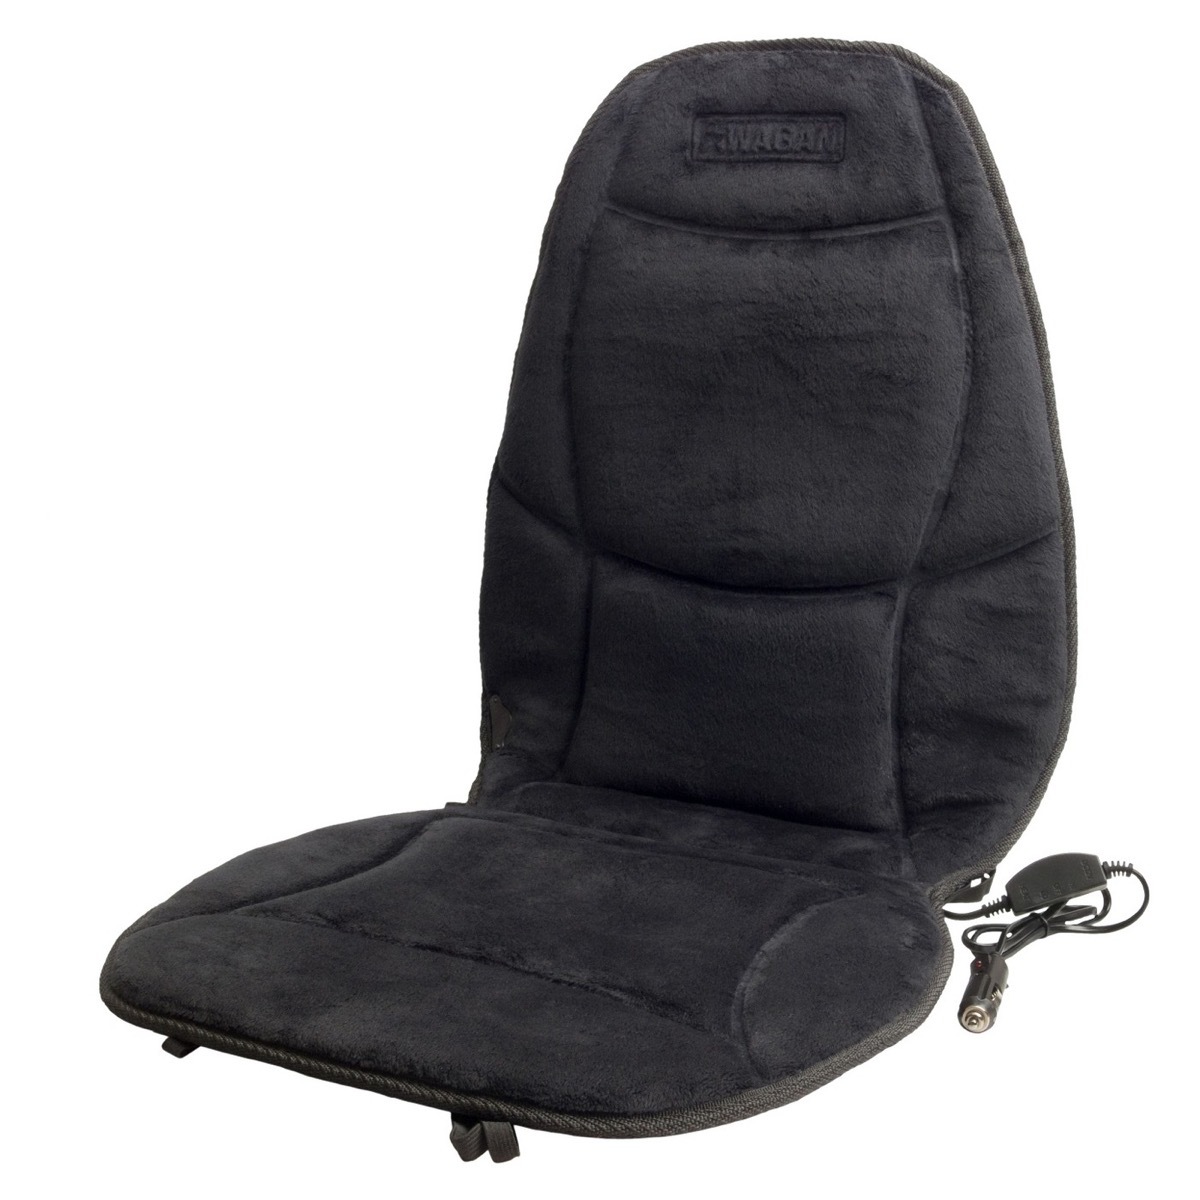 Heated Car Seat Cushion {Target Winter Essentials}